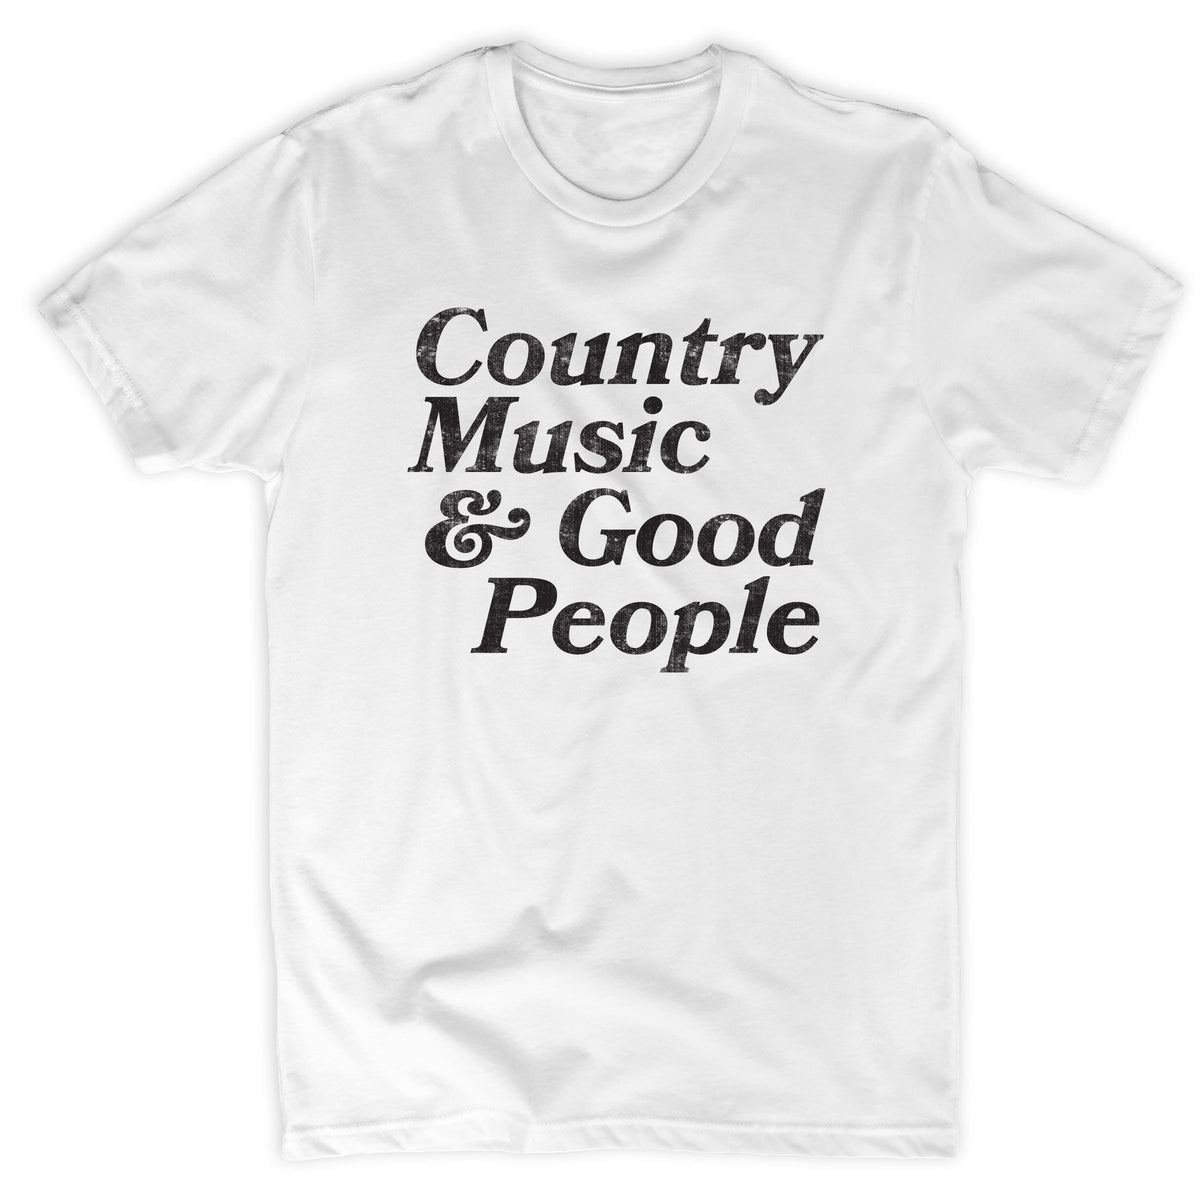 Country Music & Good People Tee